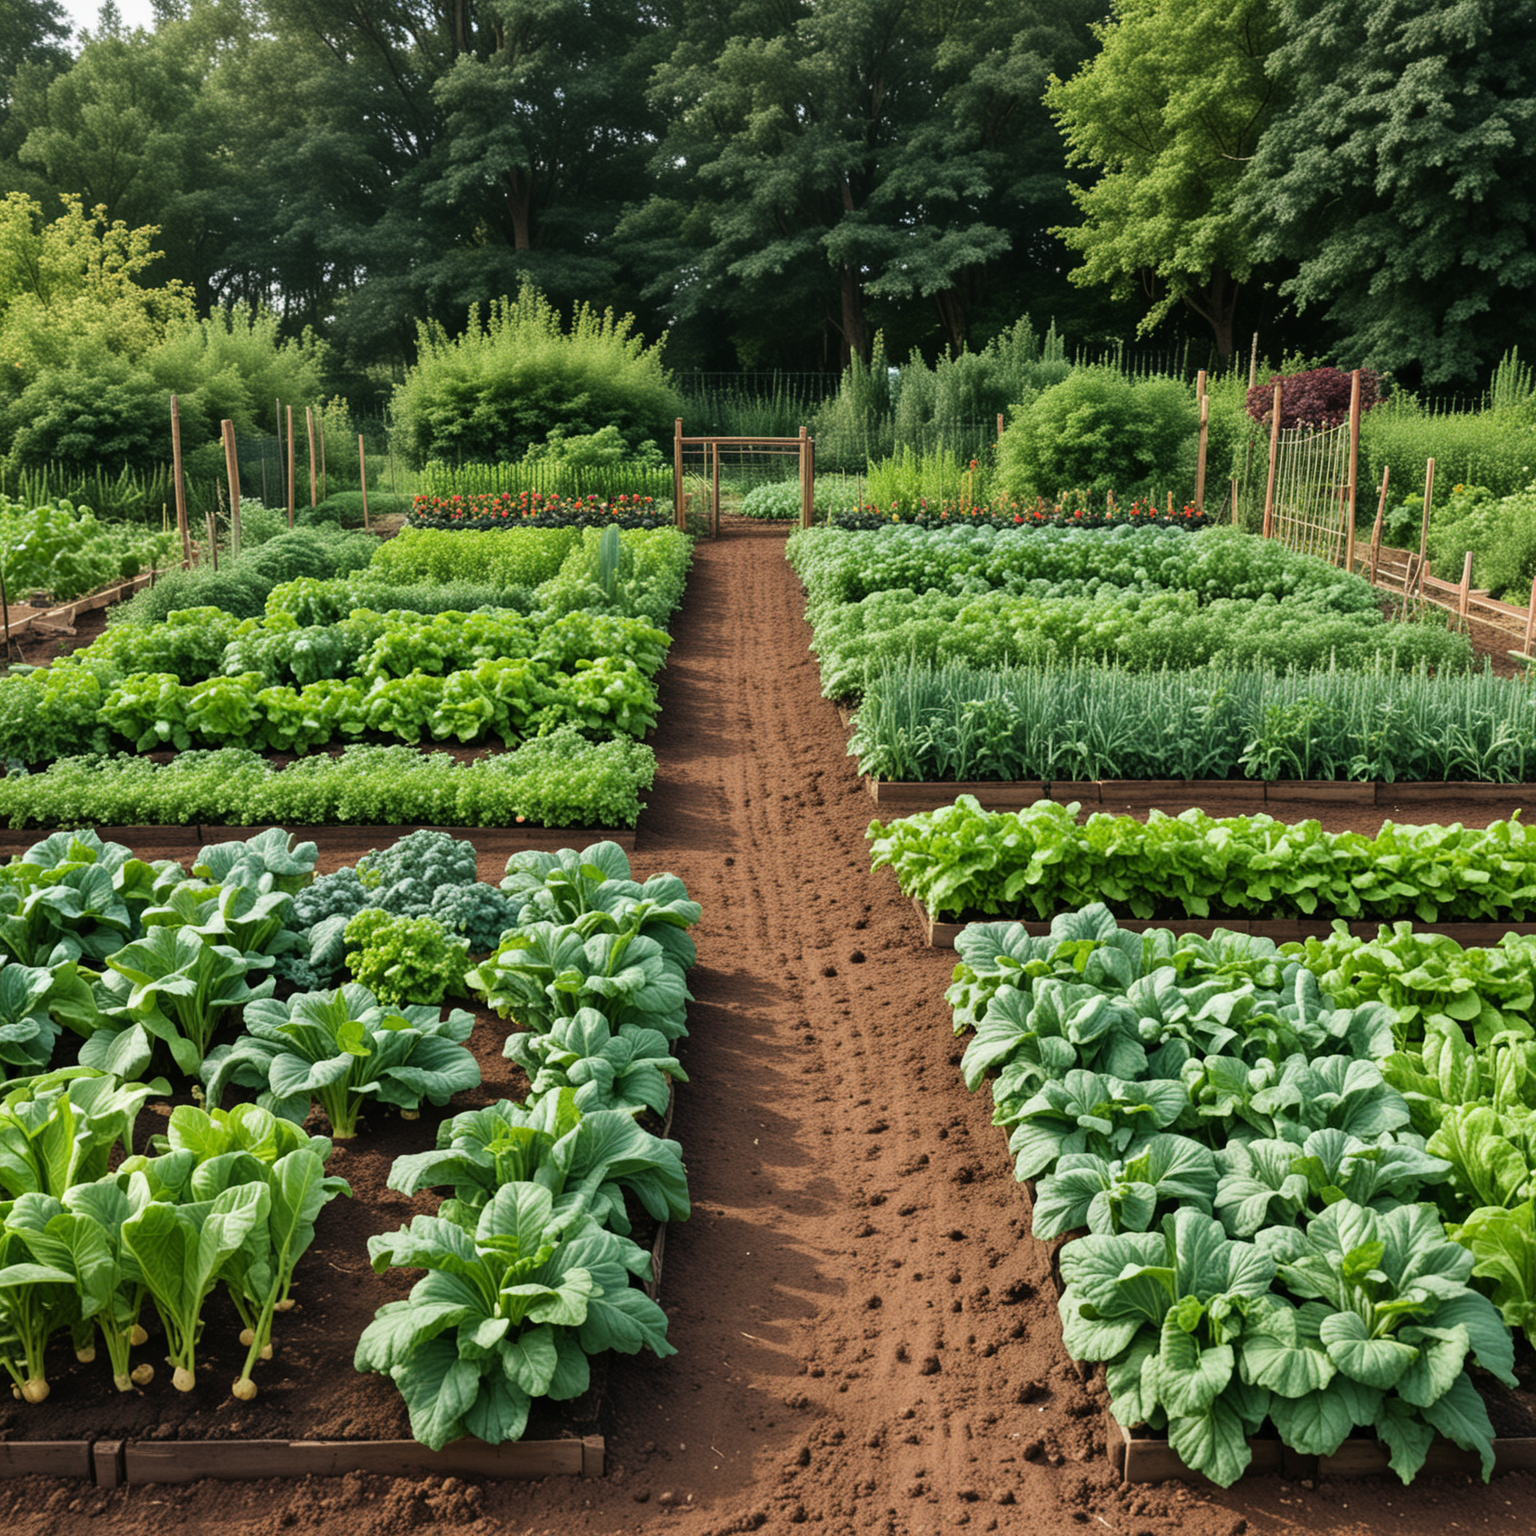 Abundant Vegetable Garden with Neat Rows of Fresh Produce